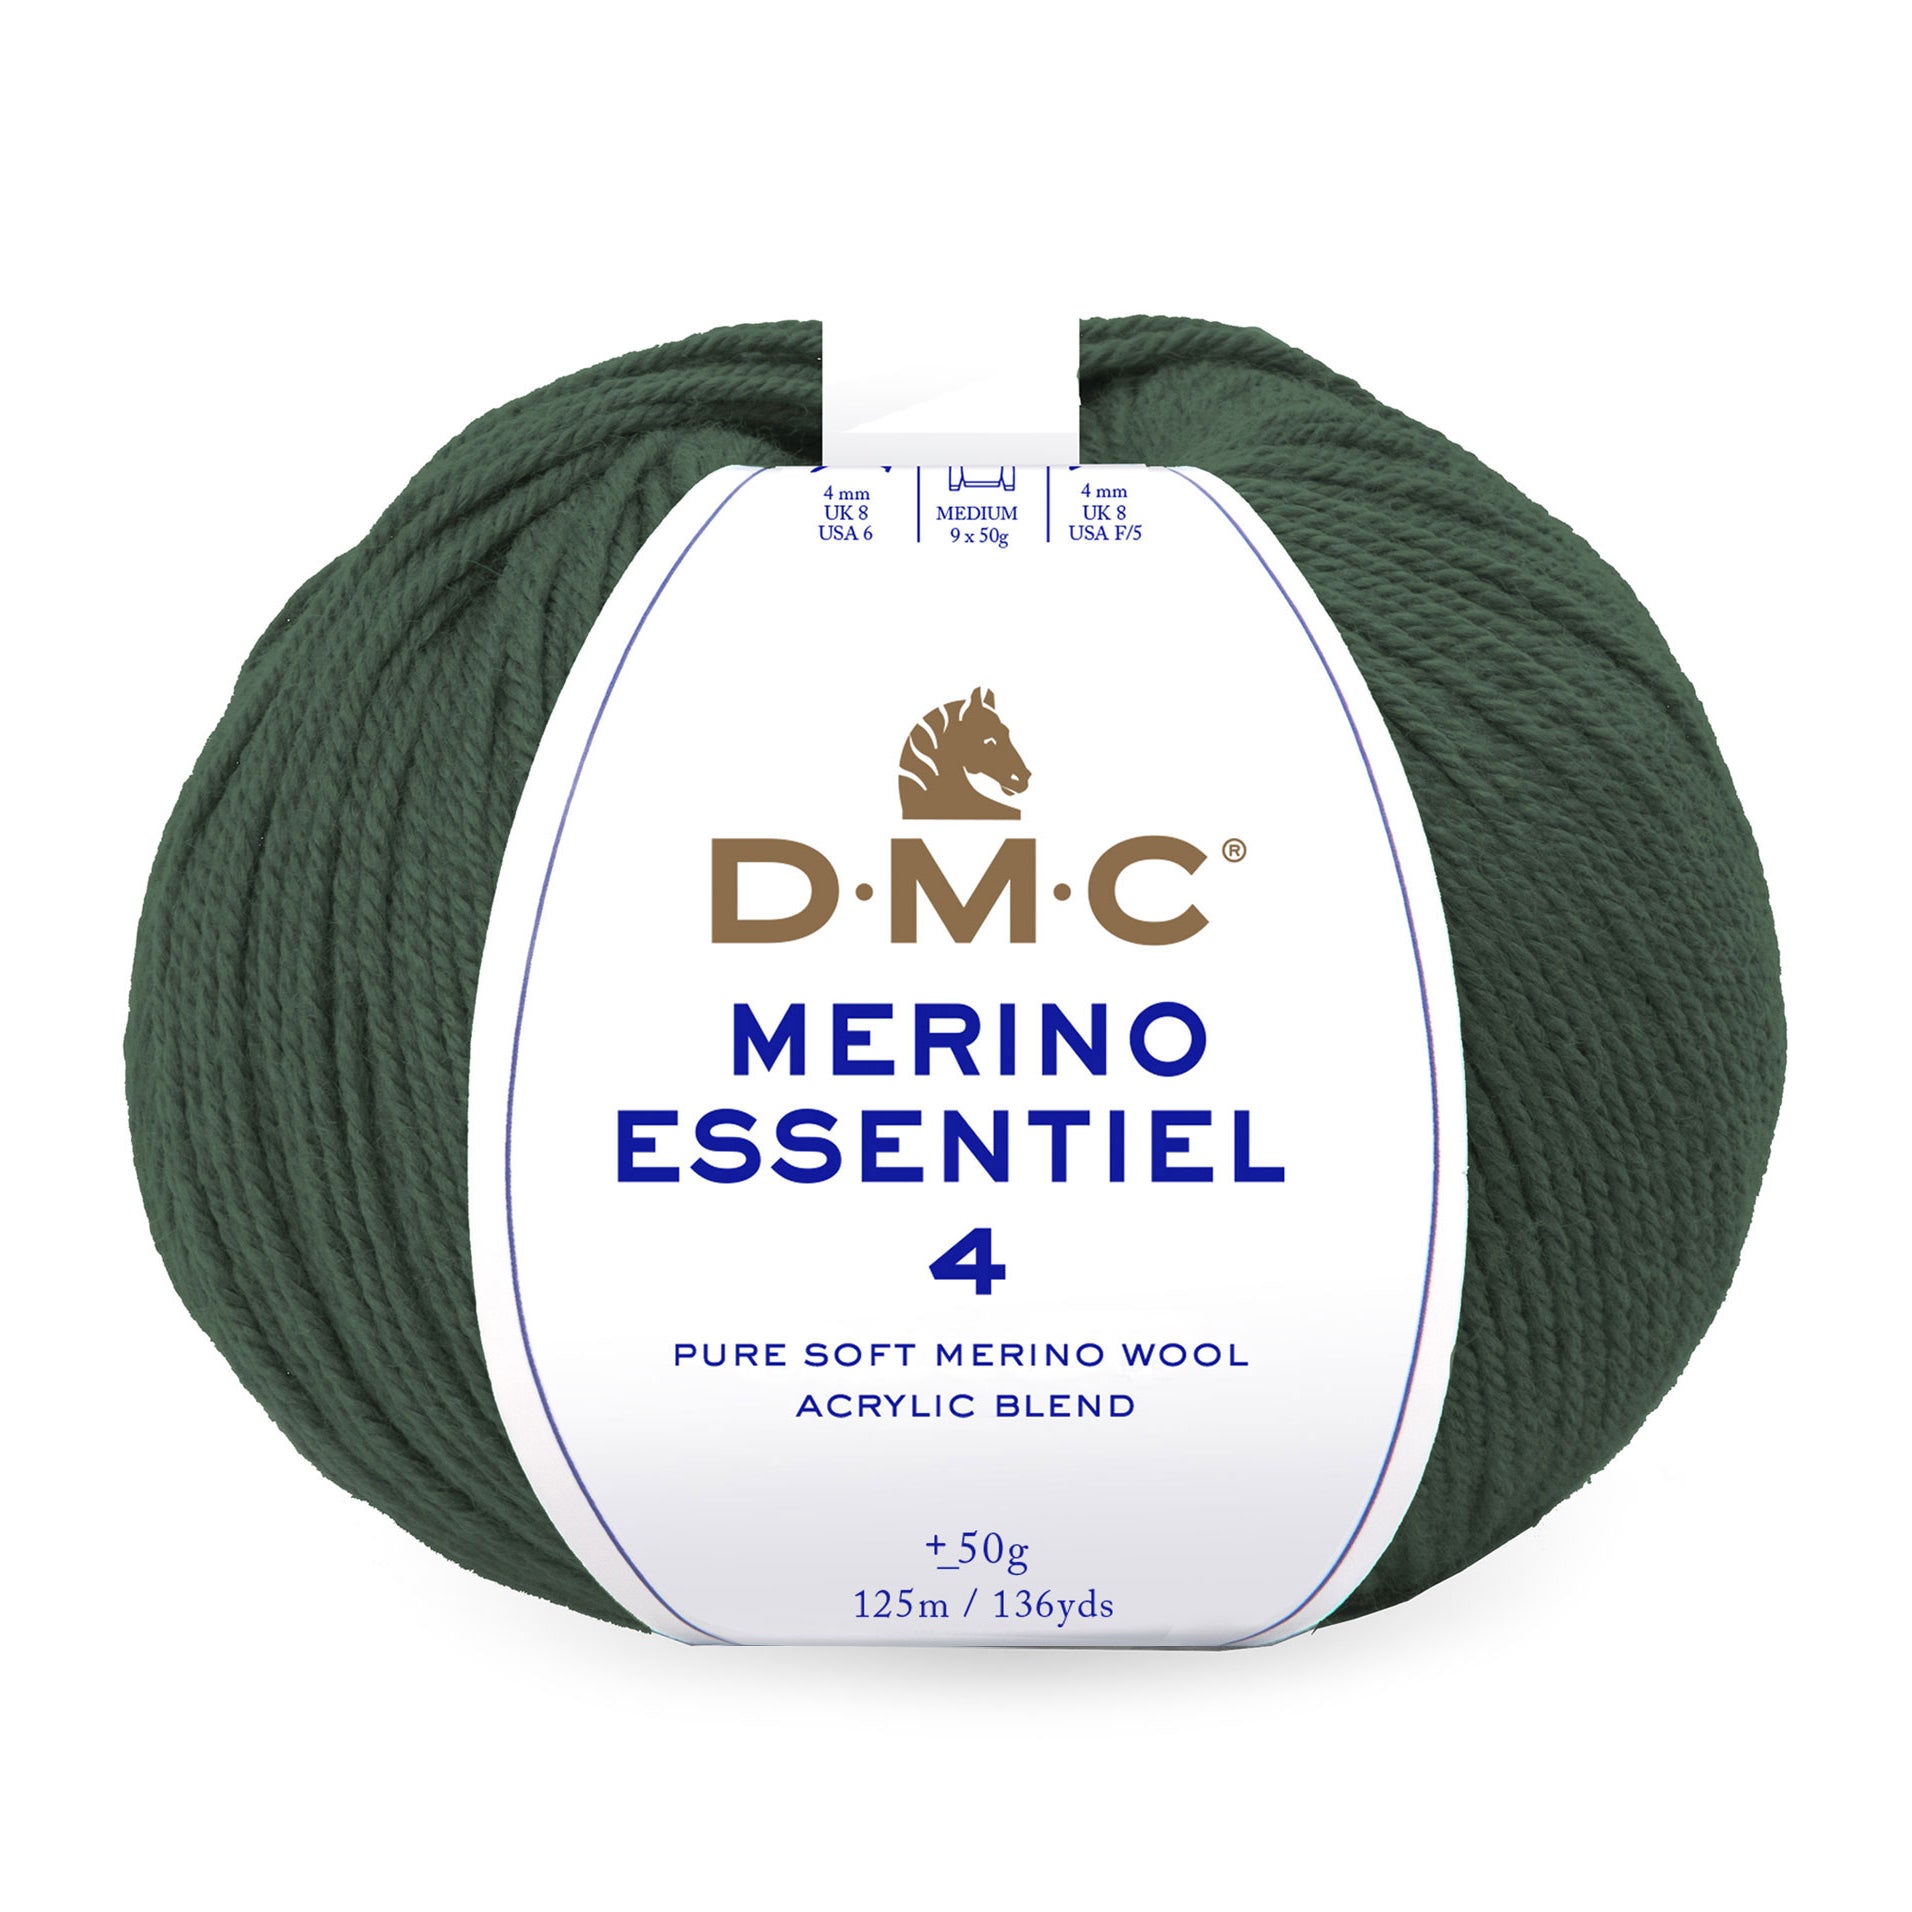 DMC Merino Essentiel 4 - Soft and light yarn made of high quality Merino wool and acrylic